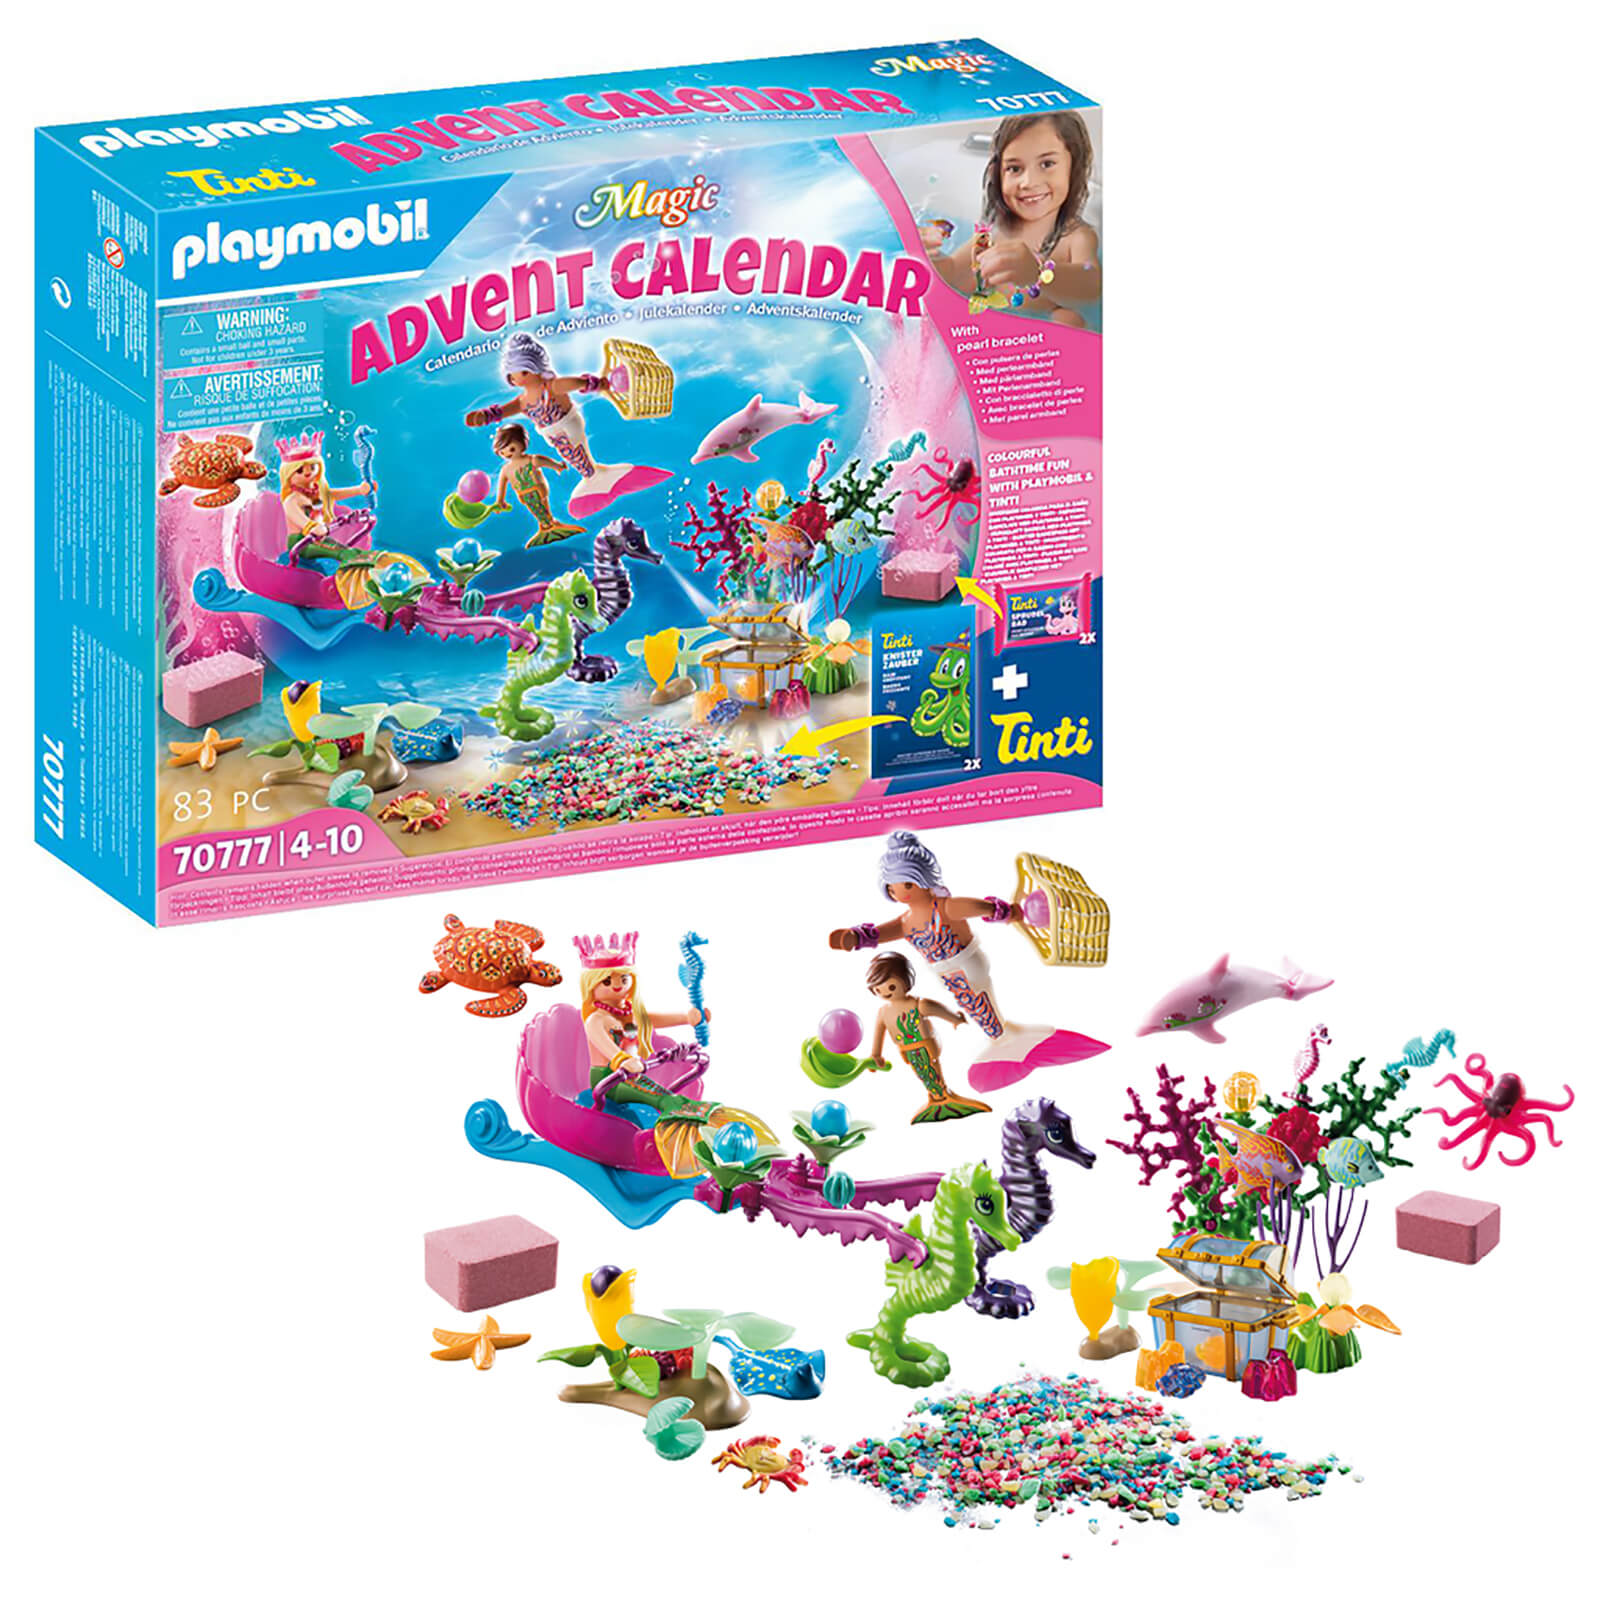 Playmobil Advent Calendar - Mermaids (70777)